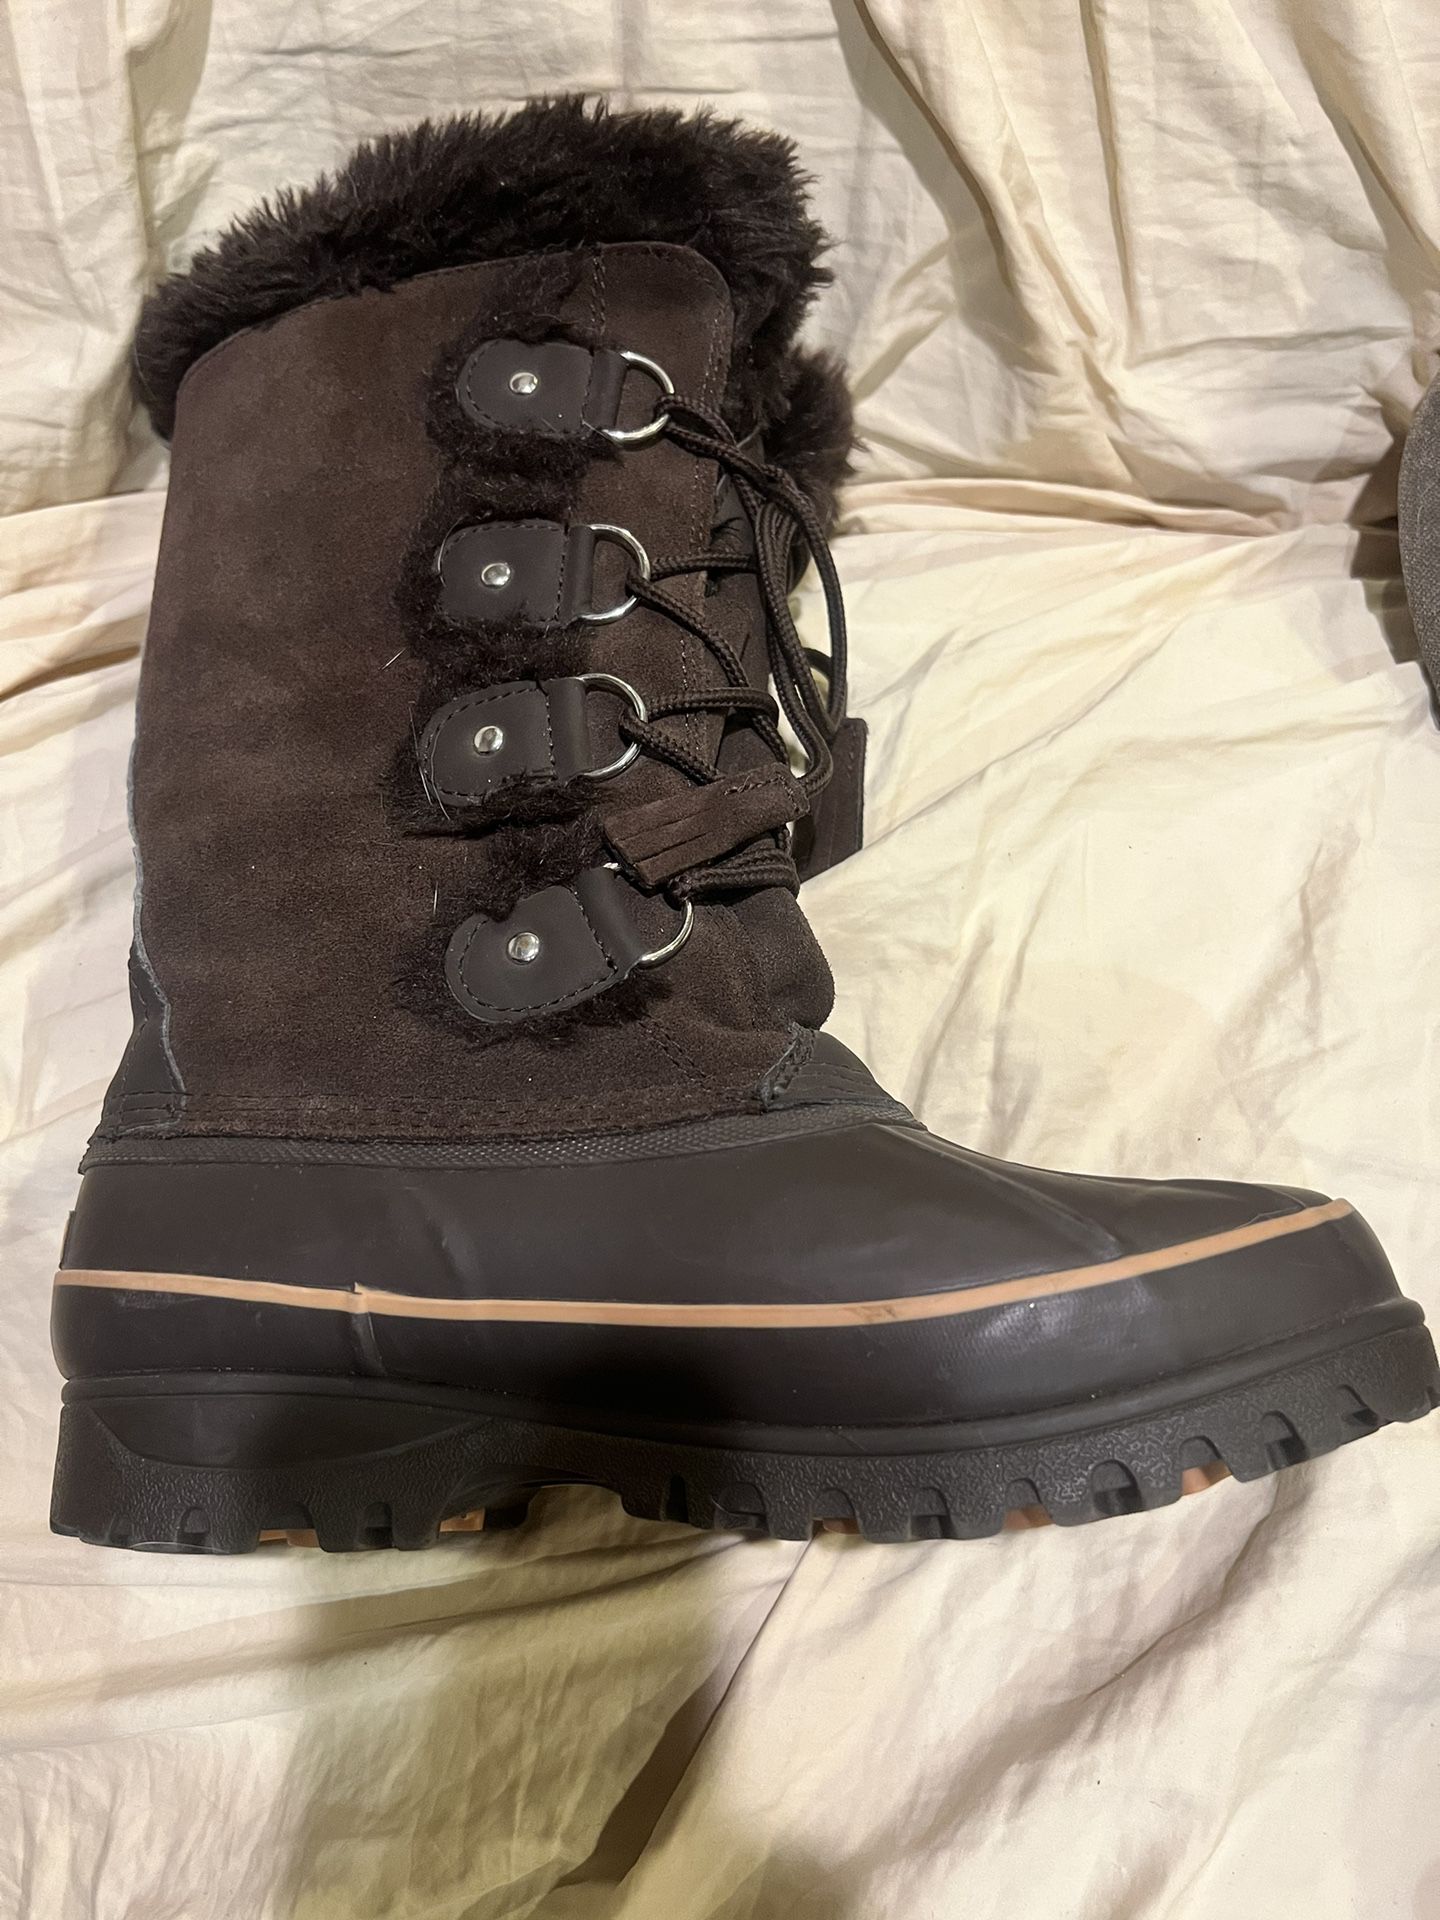 Winter Rain/Snow Boots Size 7m Women 